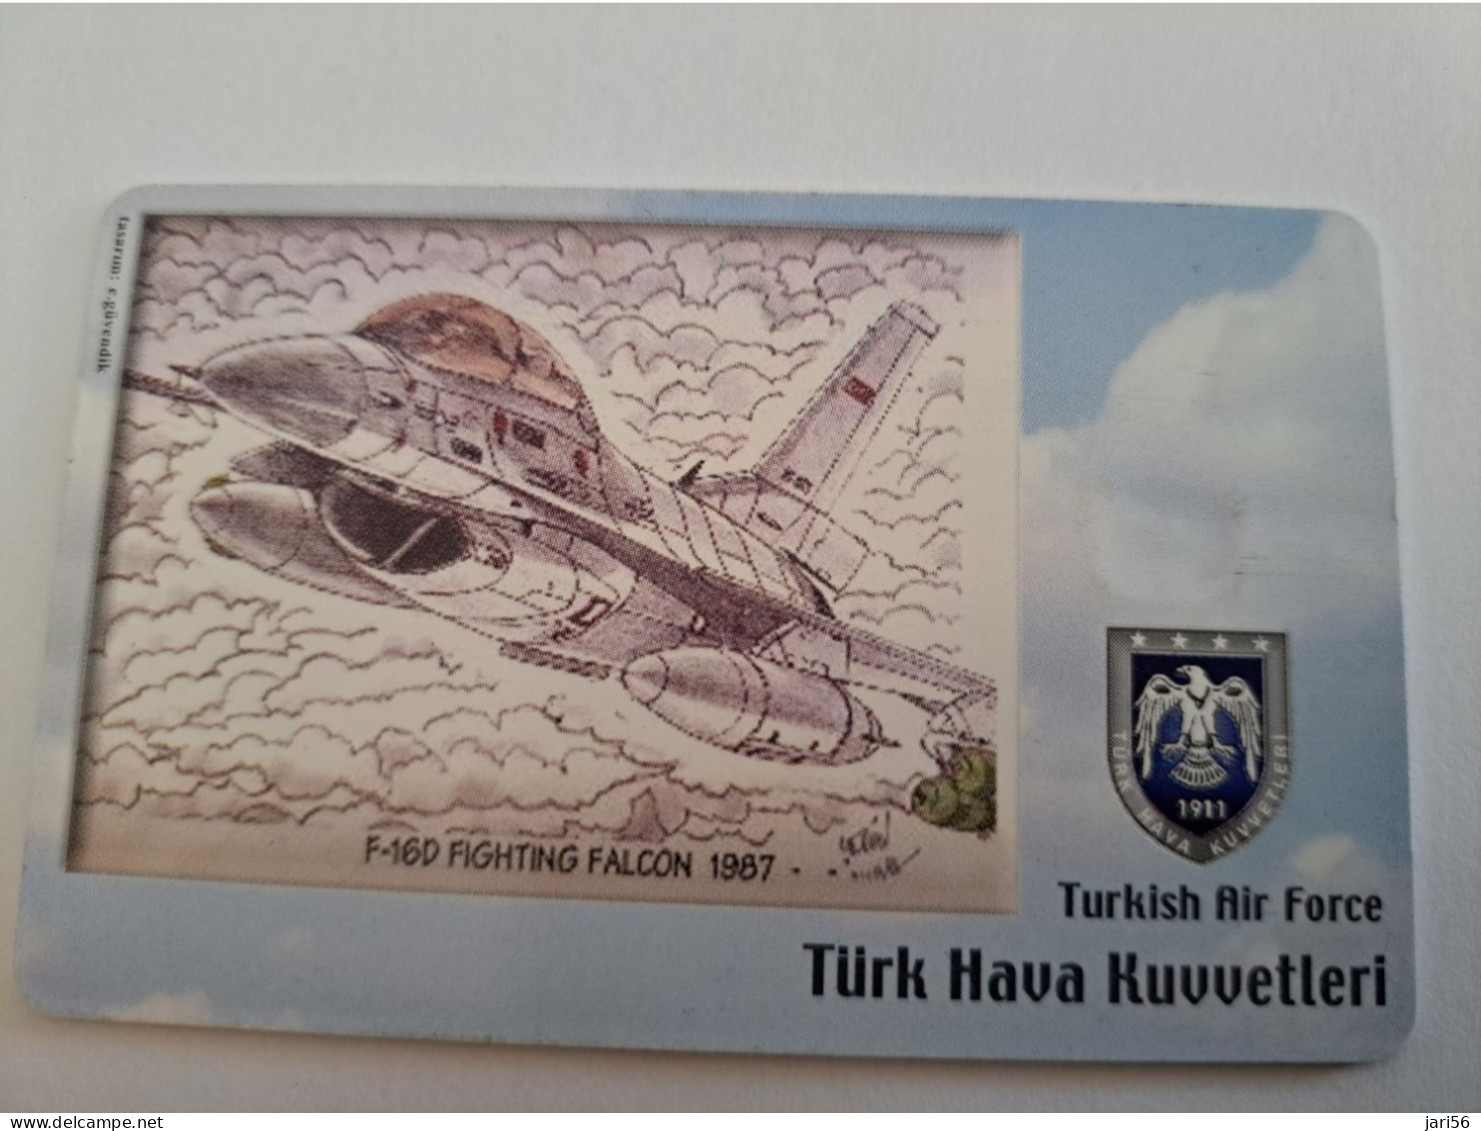 TURKIJE / 50 UNITS/ CHIPCARD/ TURKISH AIR FORCE  / DIFFERENT PLANES /        Fine Used Card  **15423** - Turkey